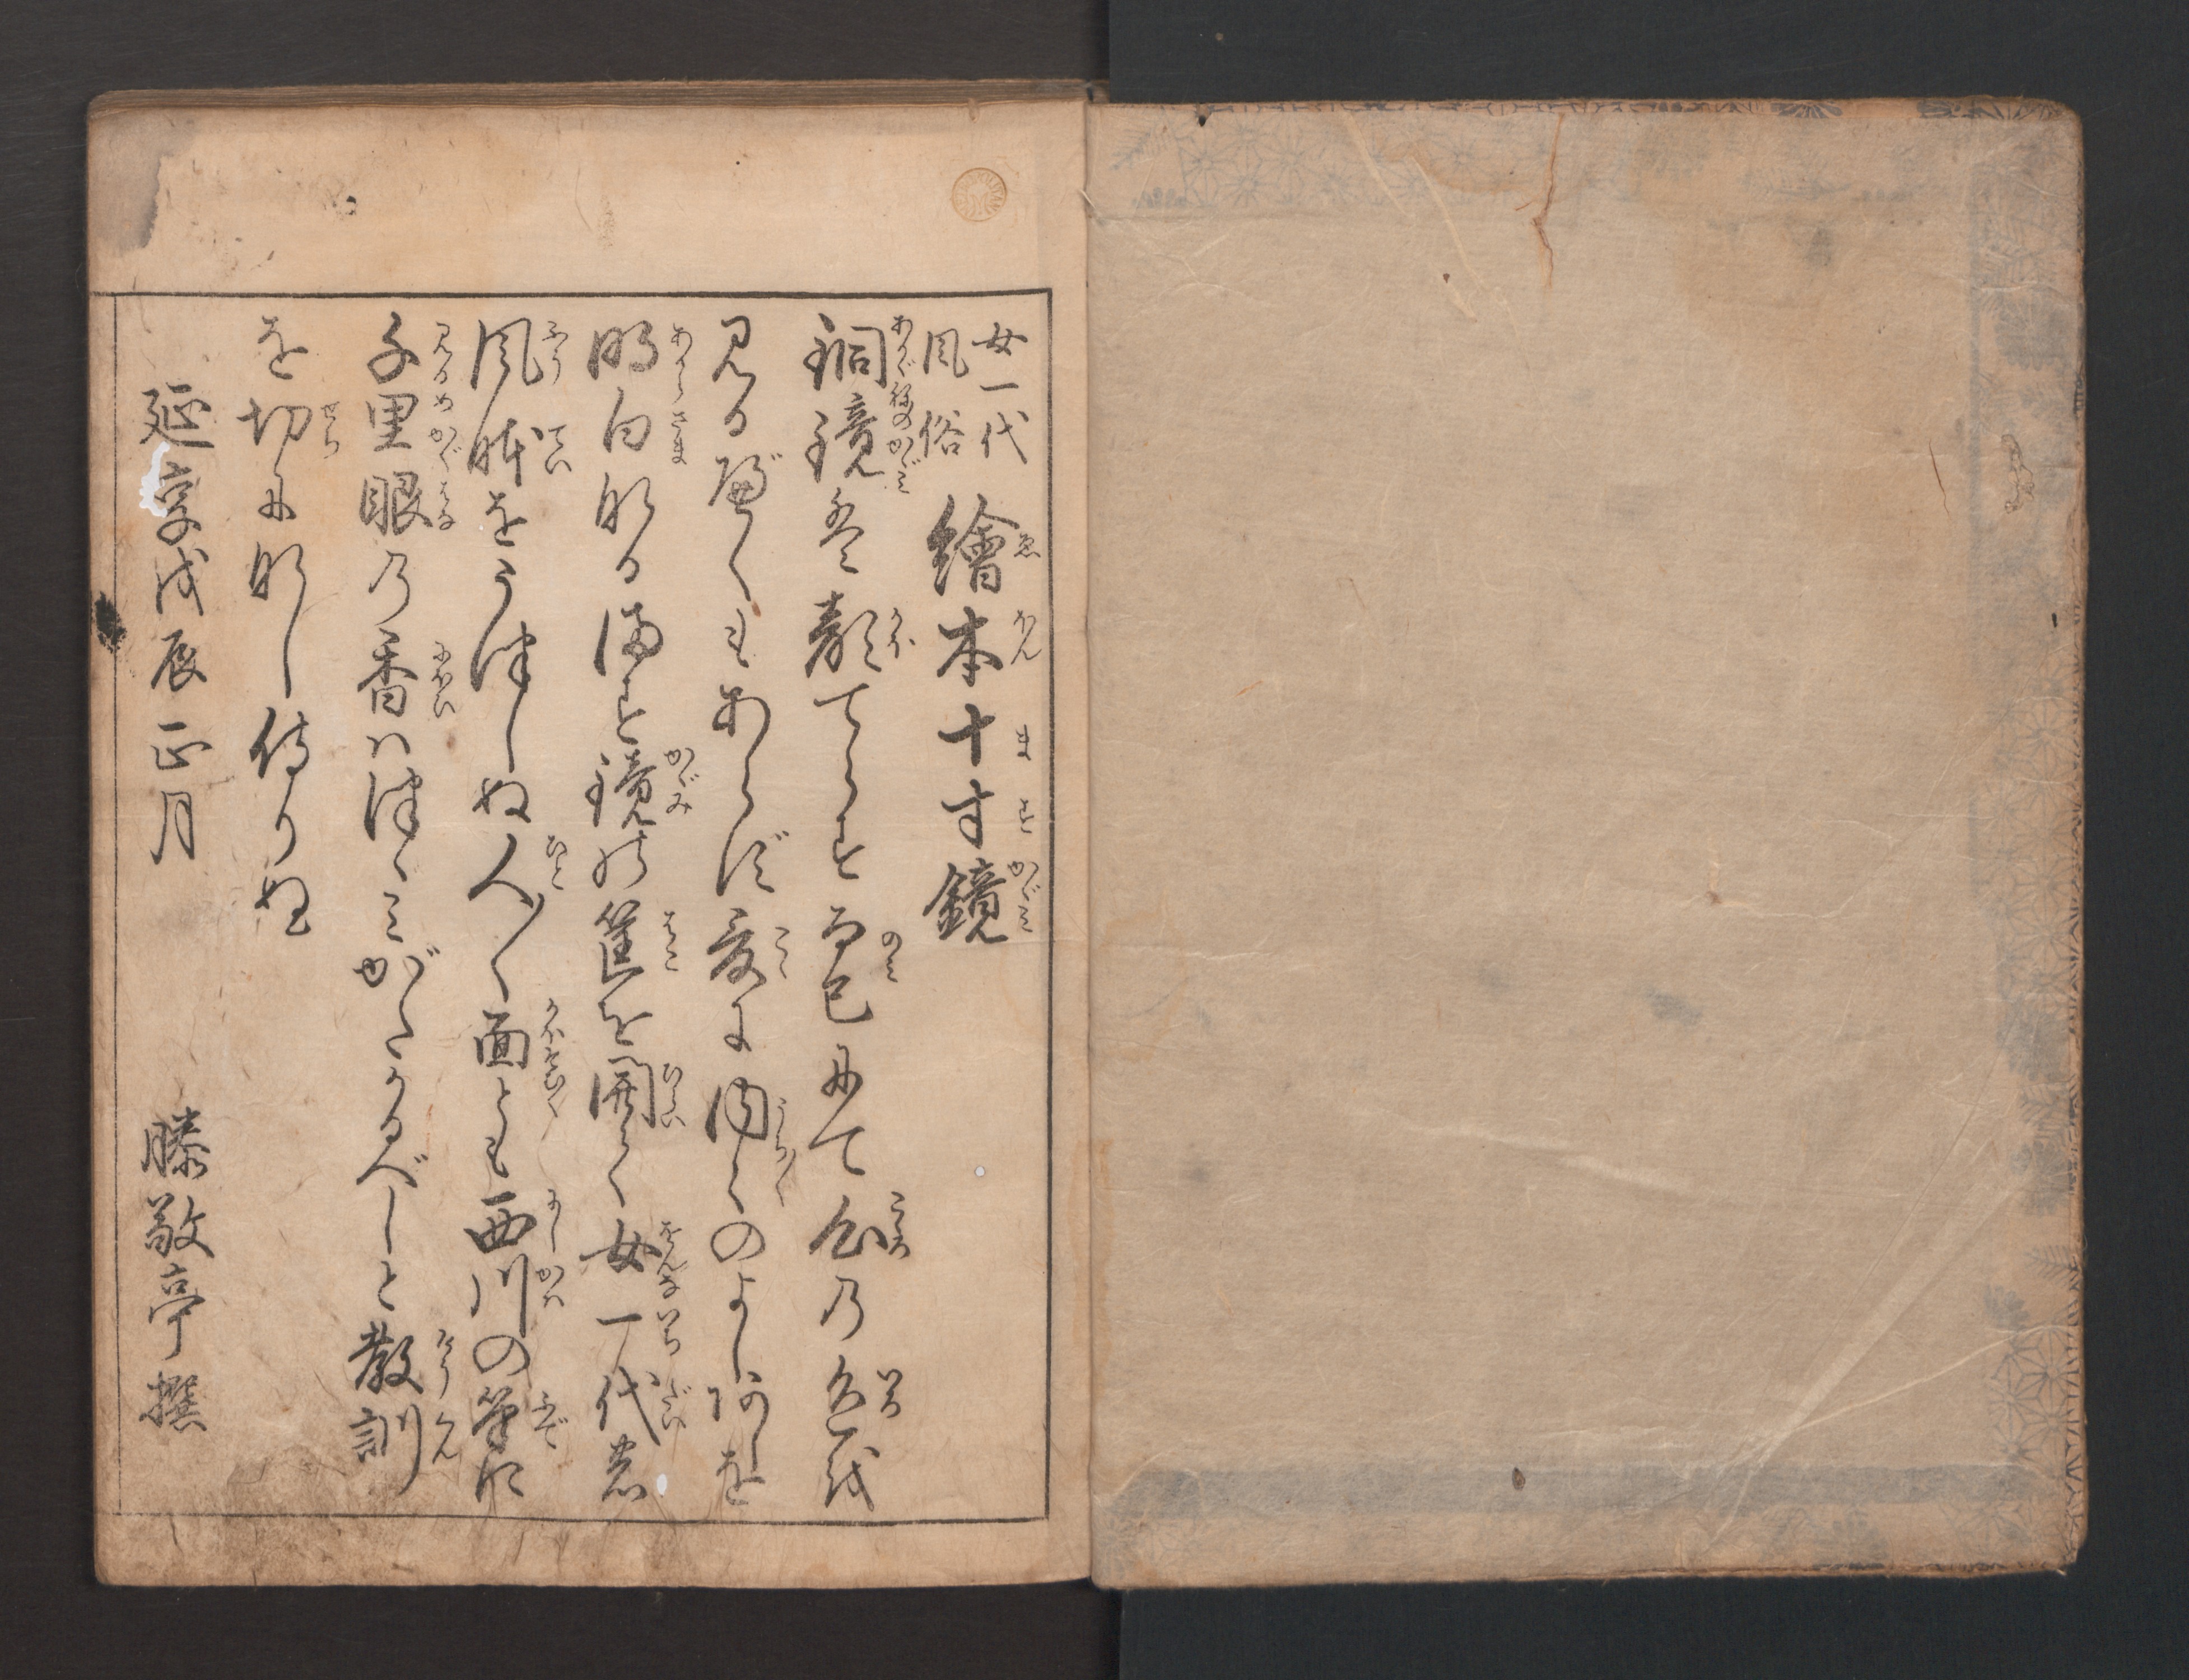 Nishikawa Sukenobu 西川祐信 | The Metropolitan Museum of Art